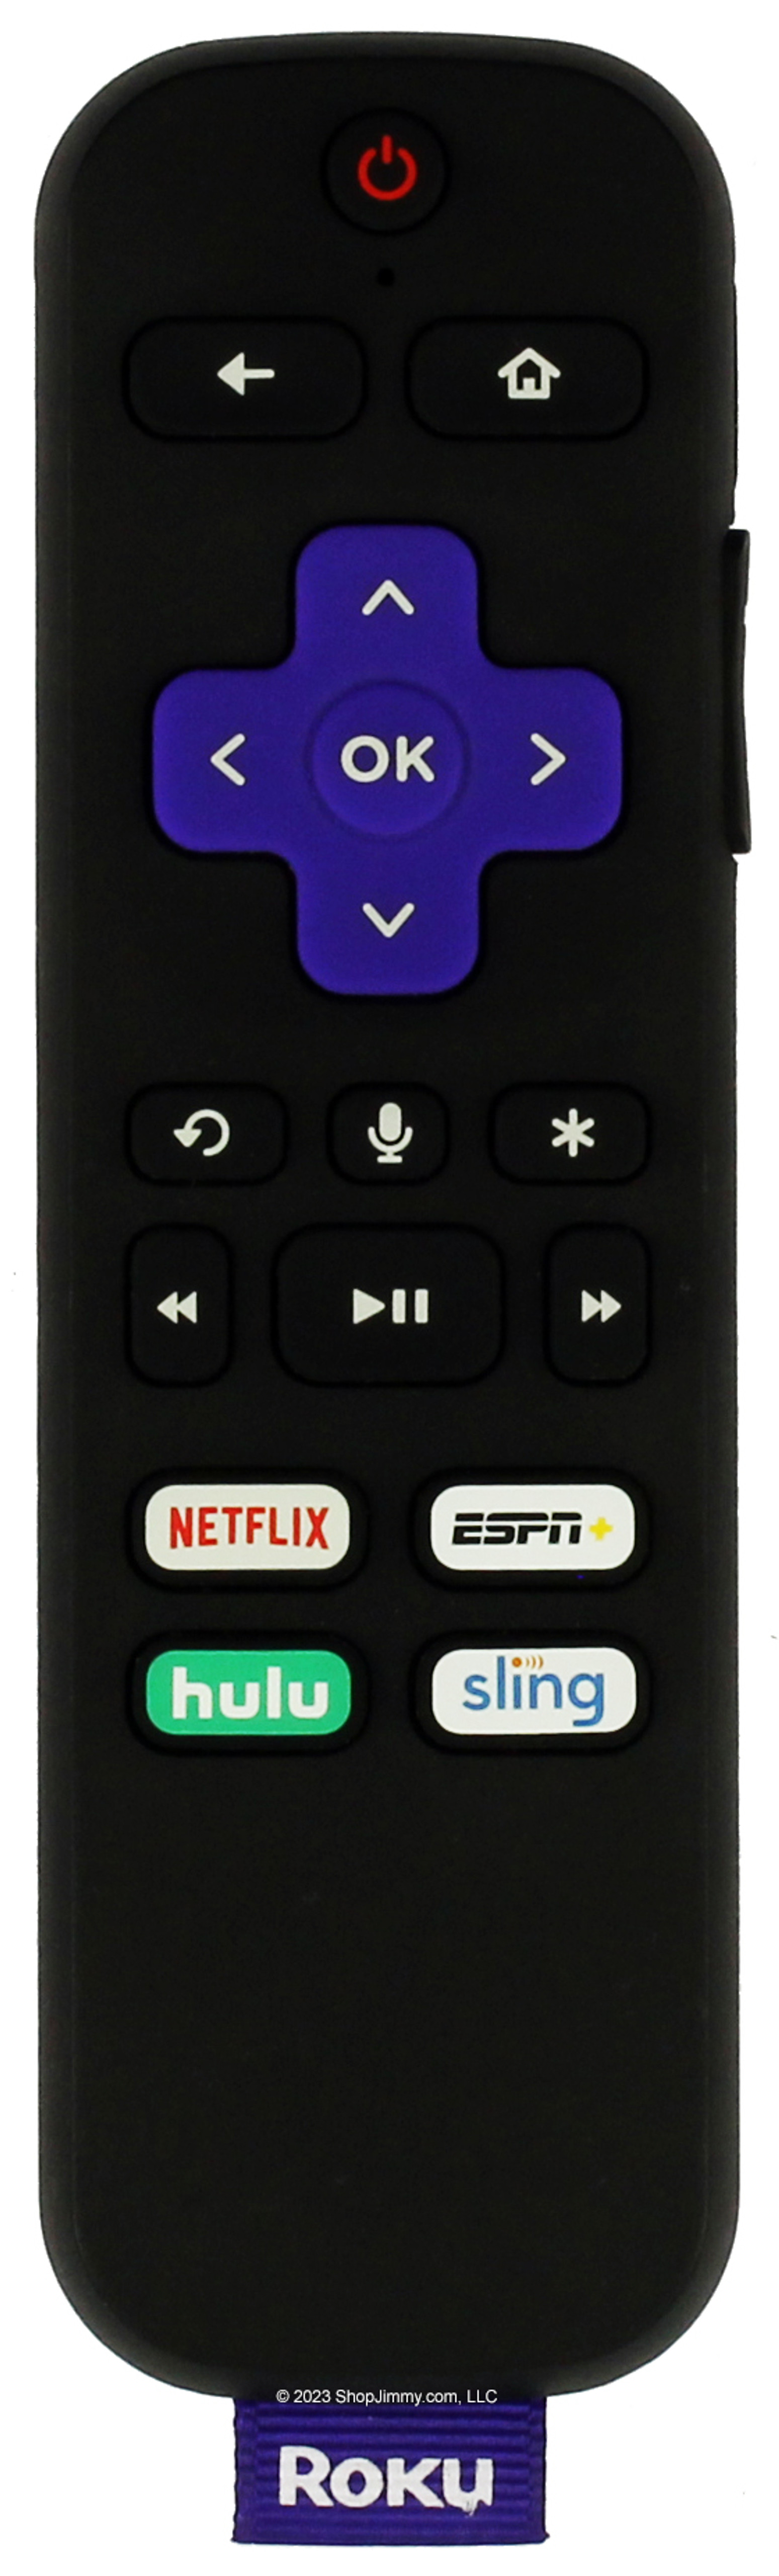 Roku 3226000610 RC-AL2 Voice Remote Control w/ Netflix Hulu Vudu Sling ...